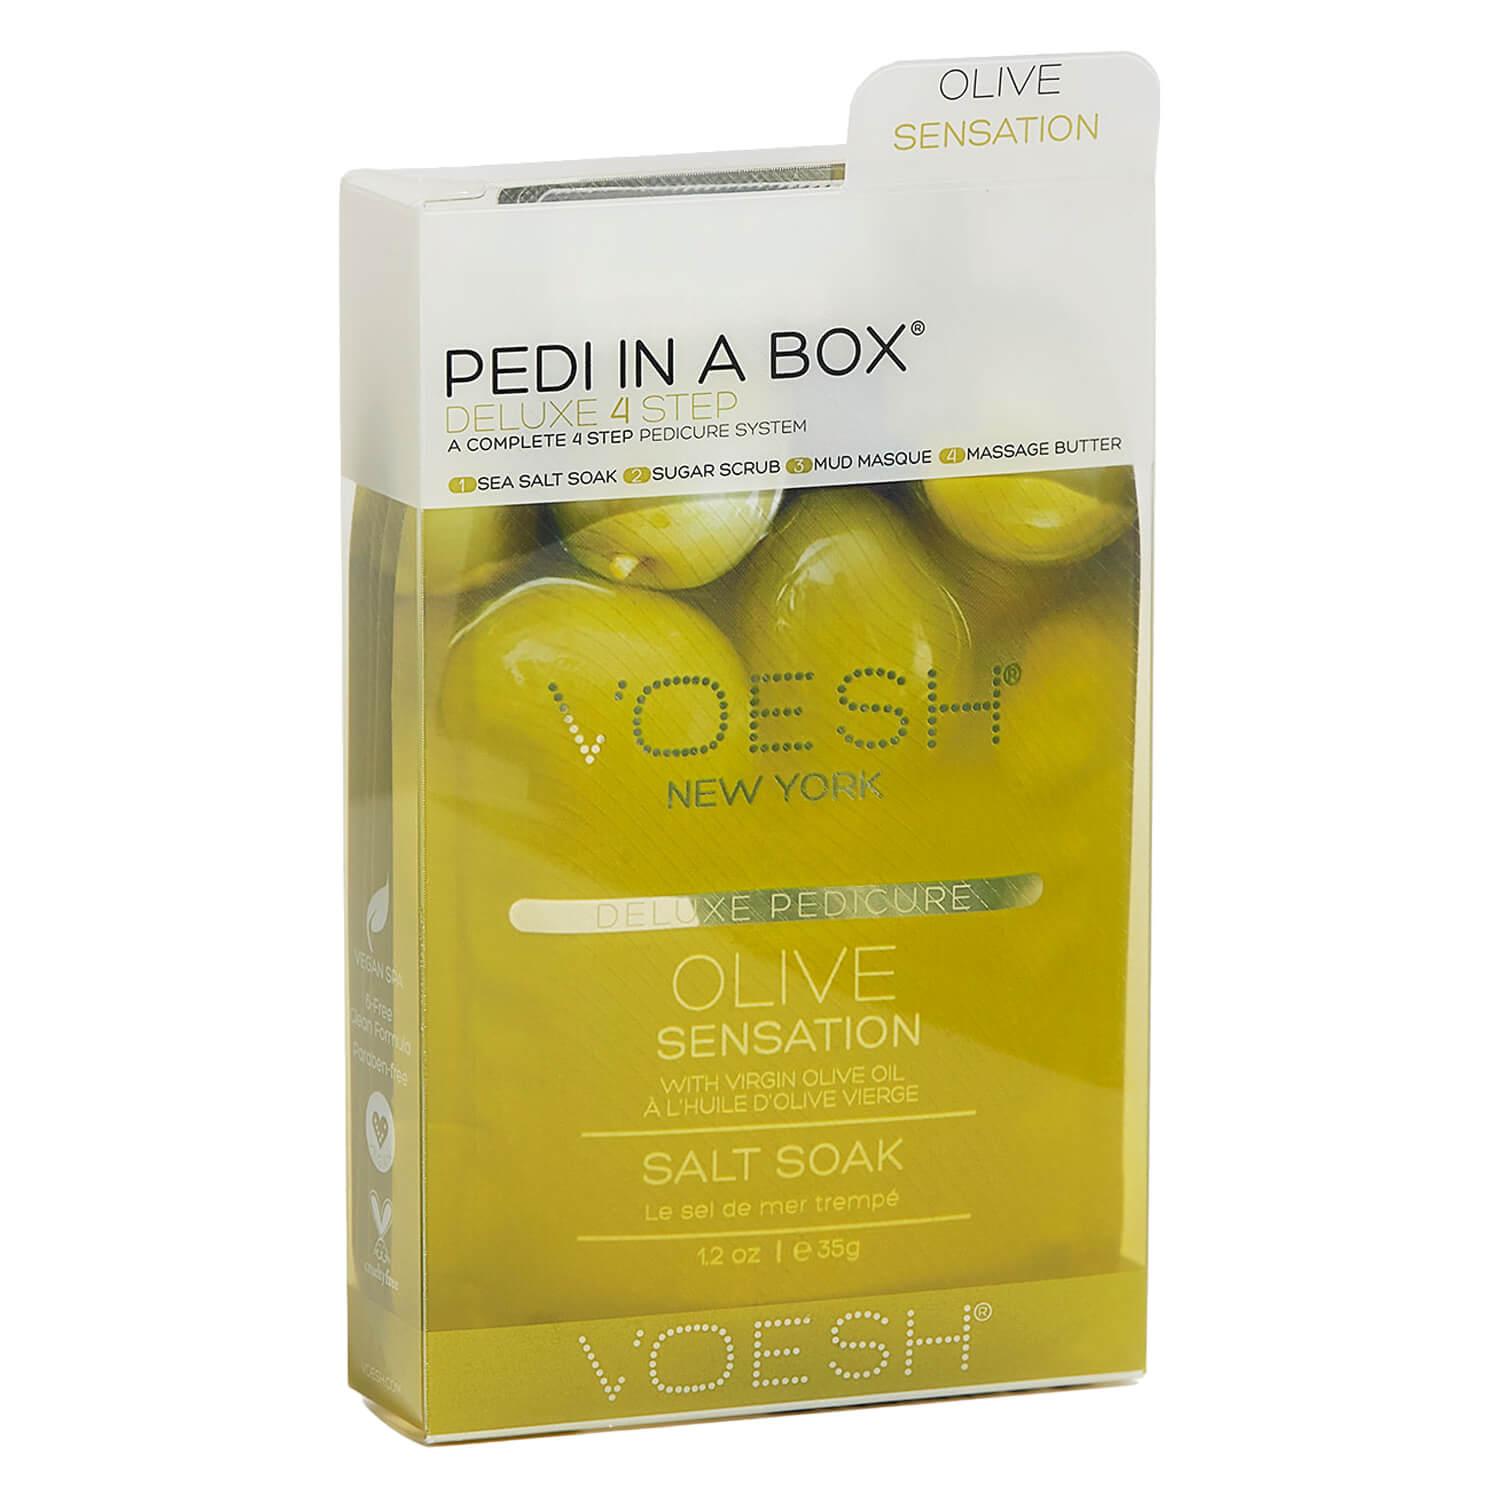 VOESH New York - Pedi In A Box 4 Step Olive Sensation